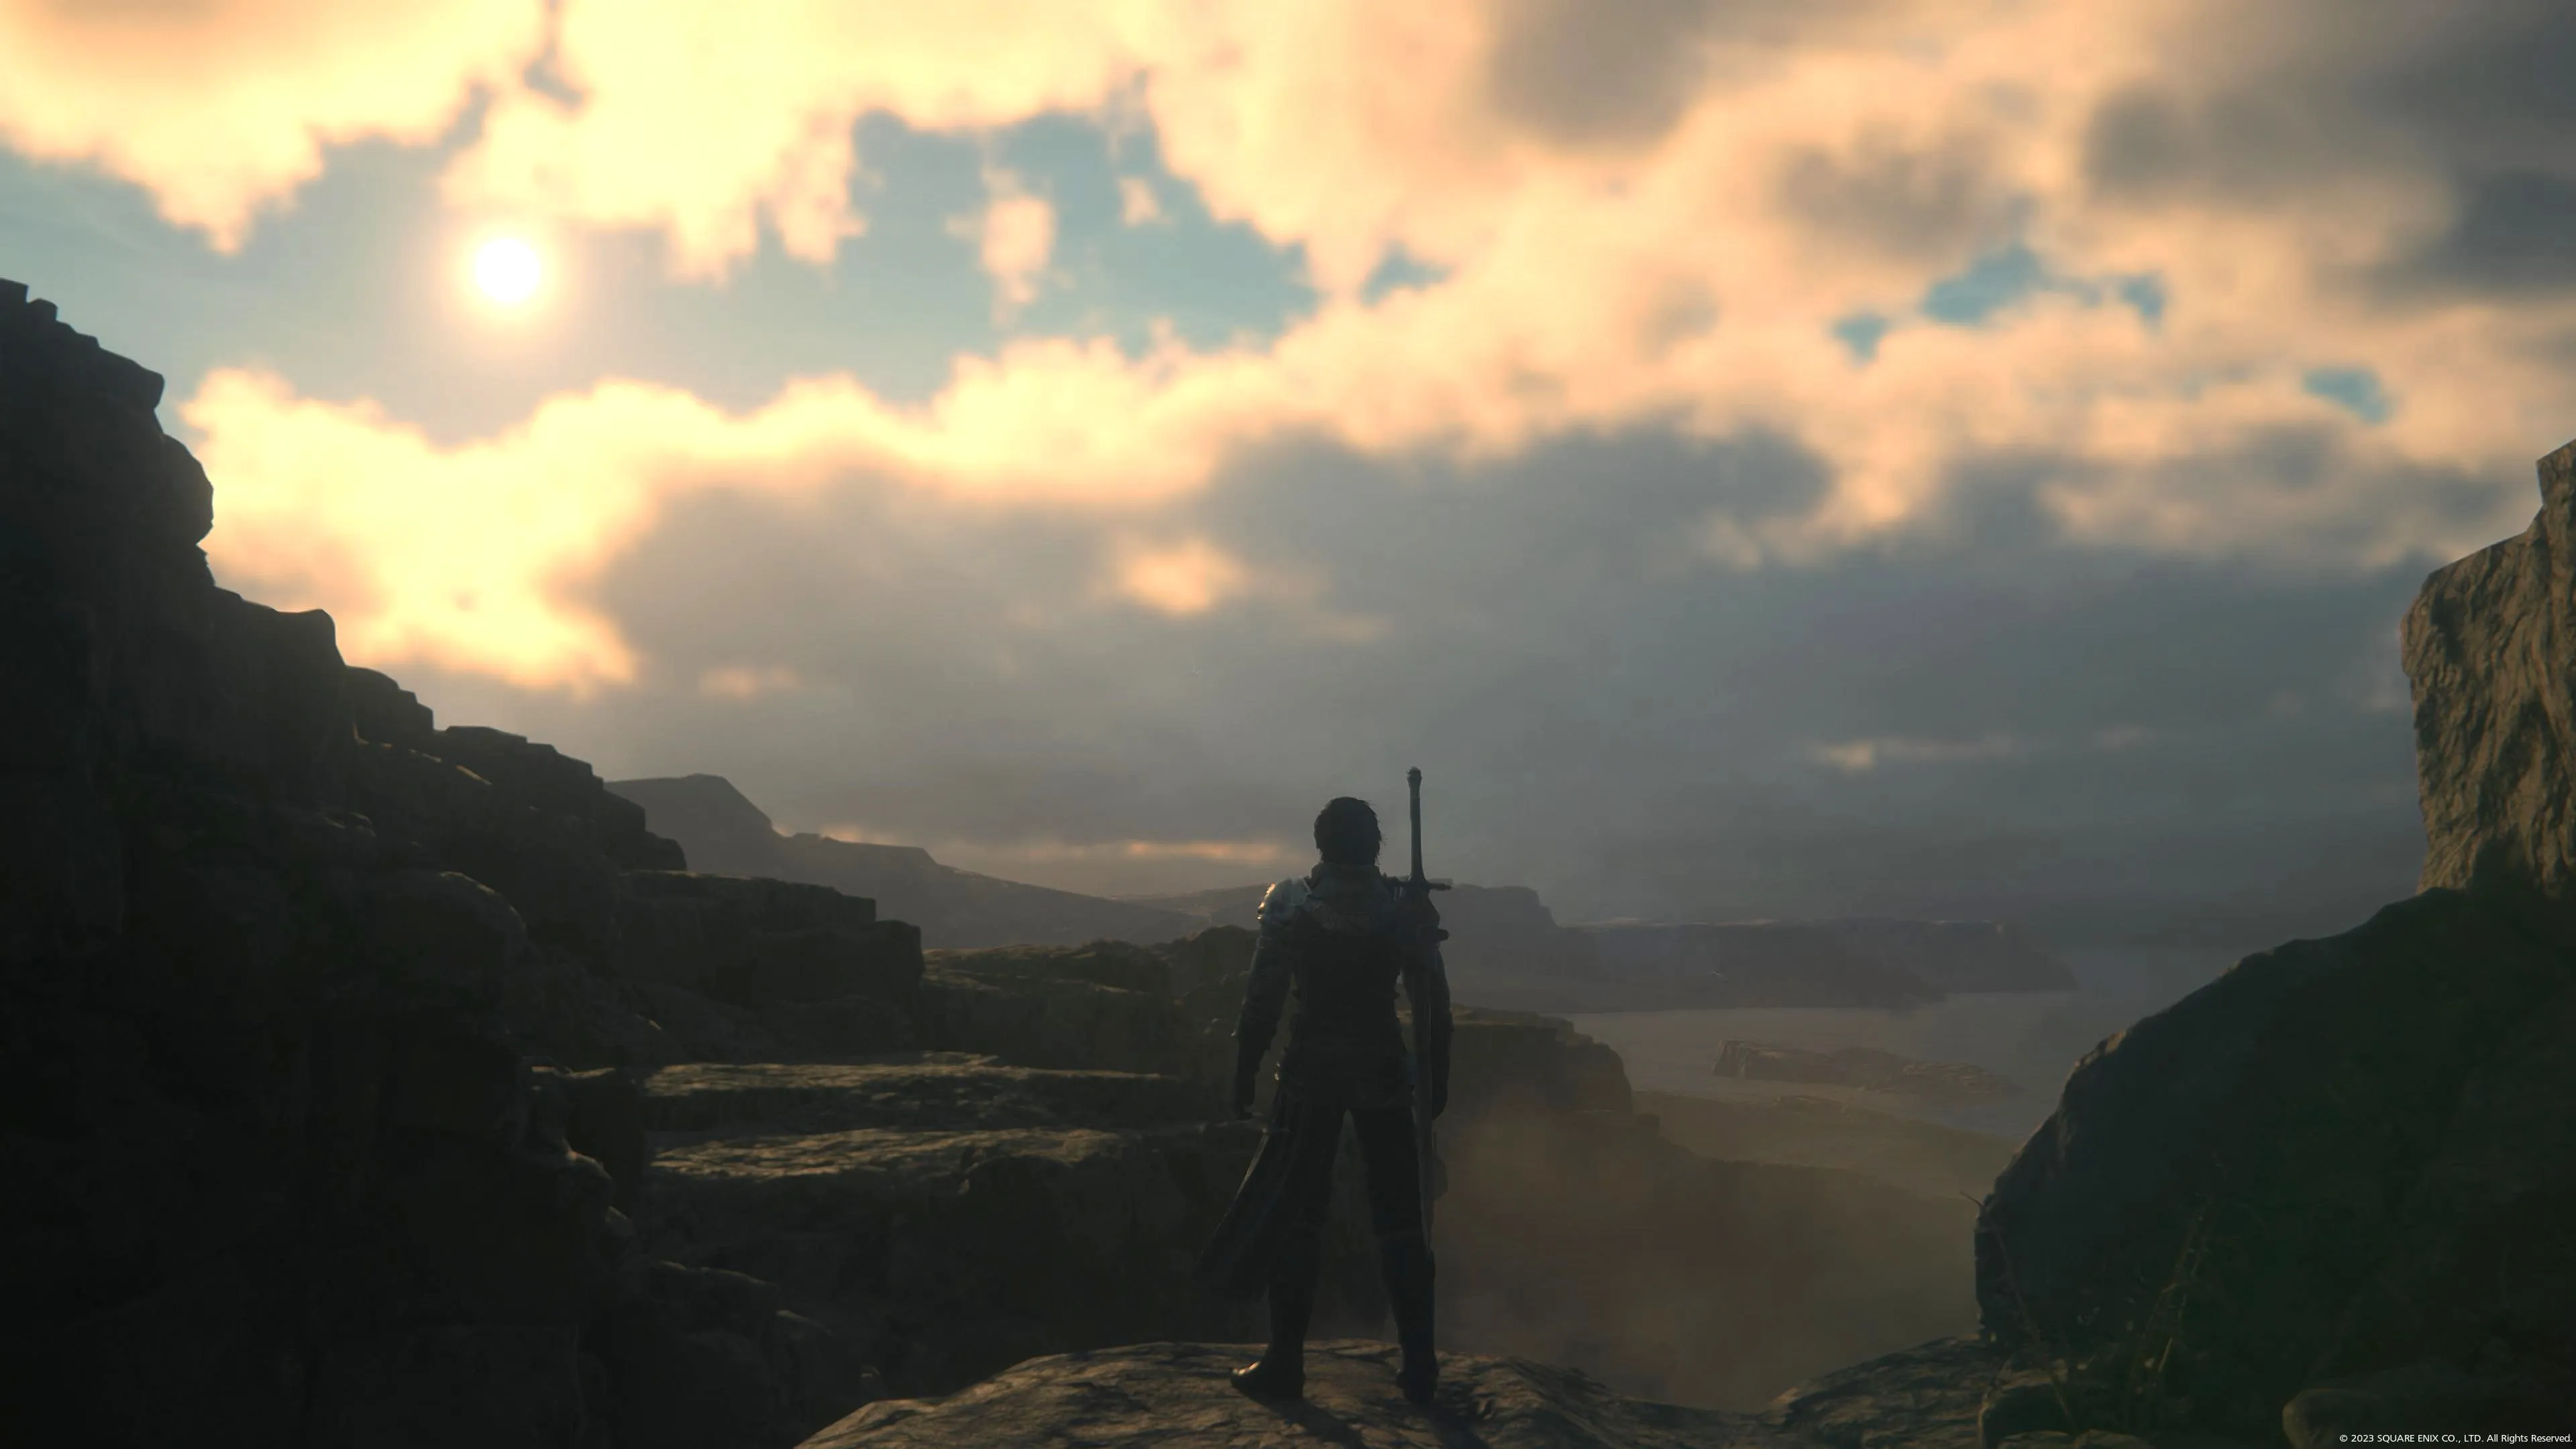 Clive de Final Fantasy 16 contempla un paisaje